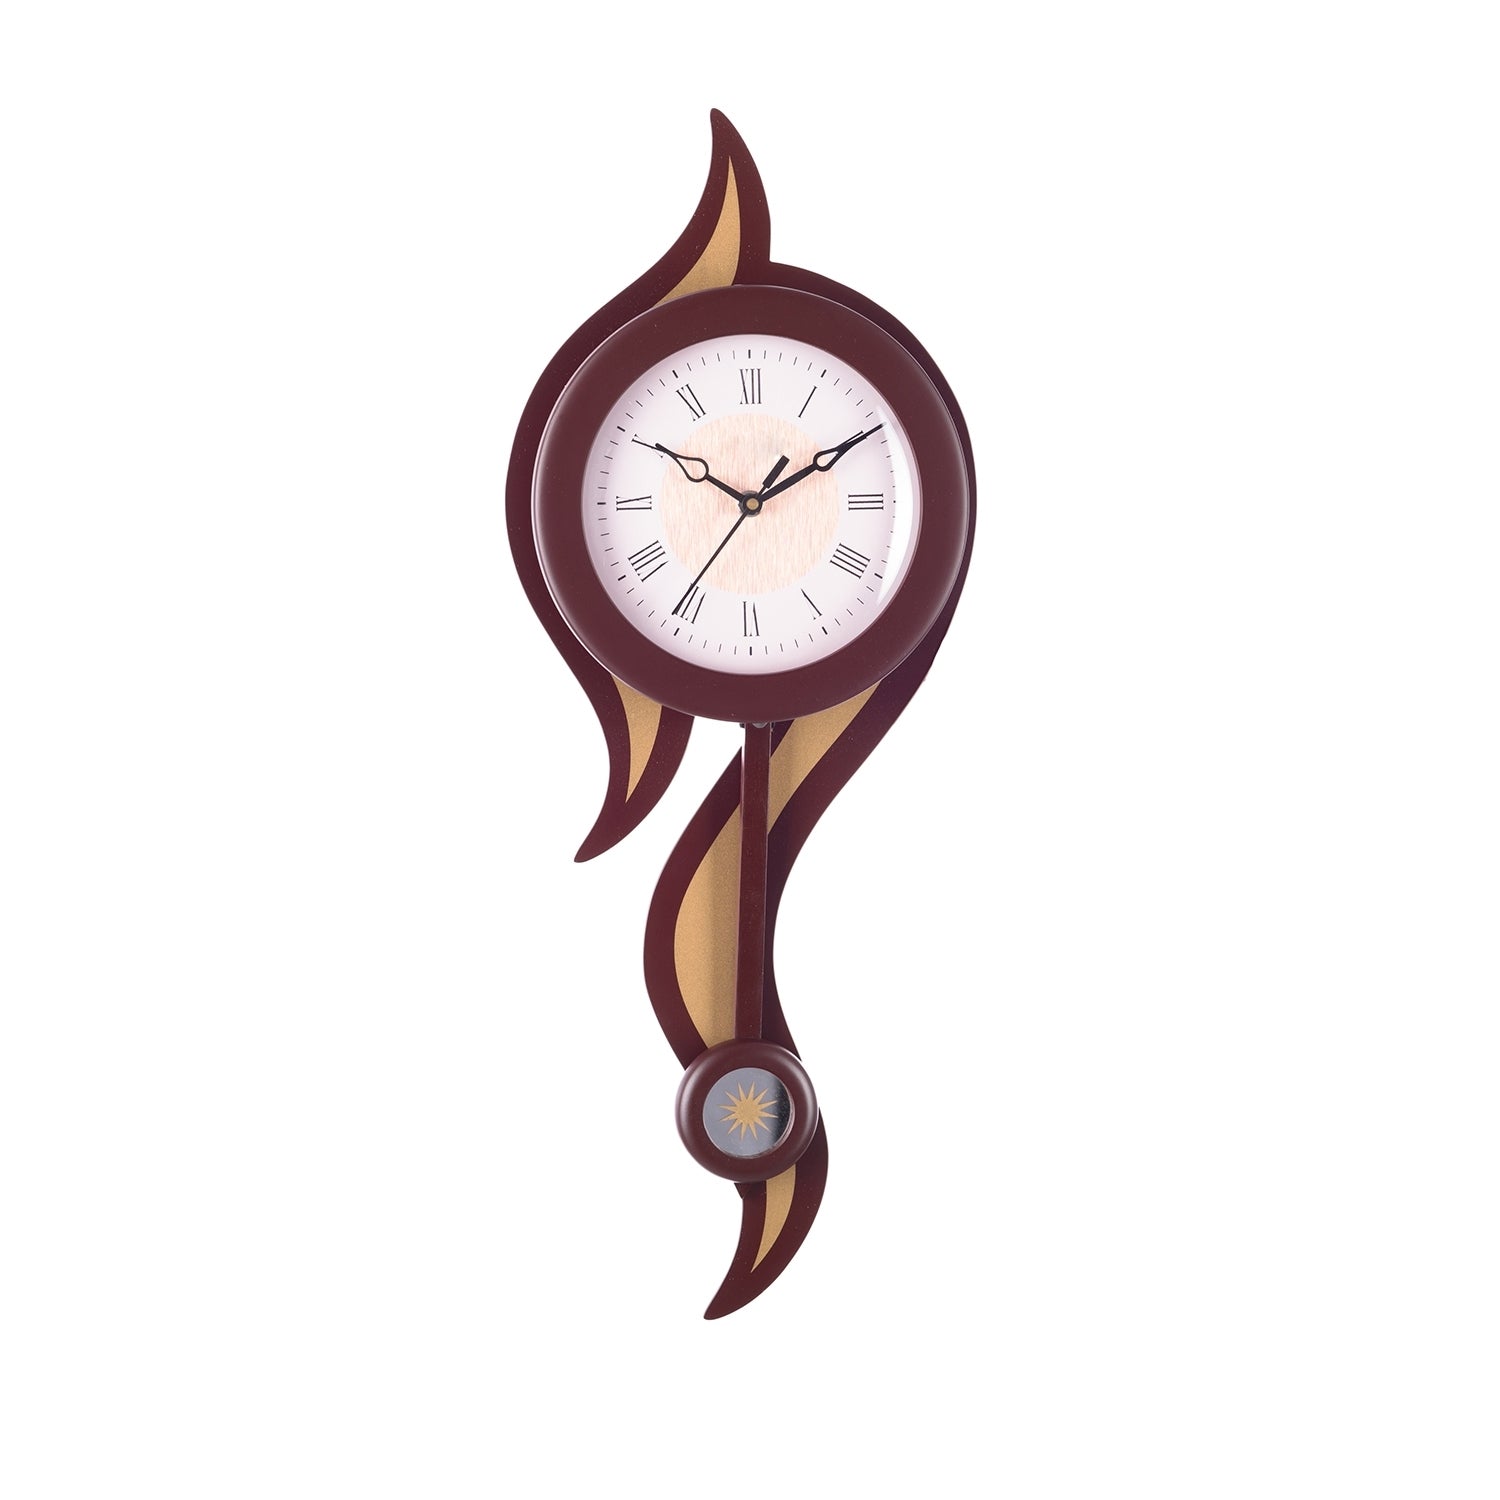 Decorative Analog Pendulum Wall Clock